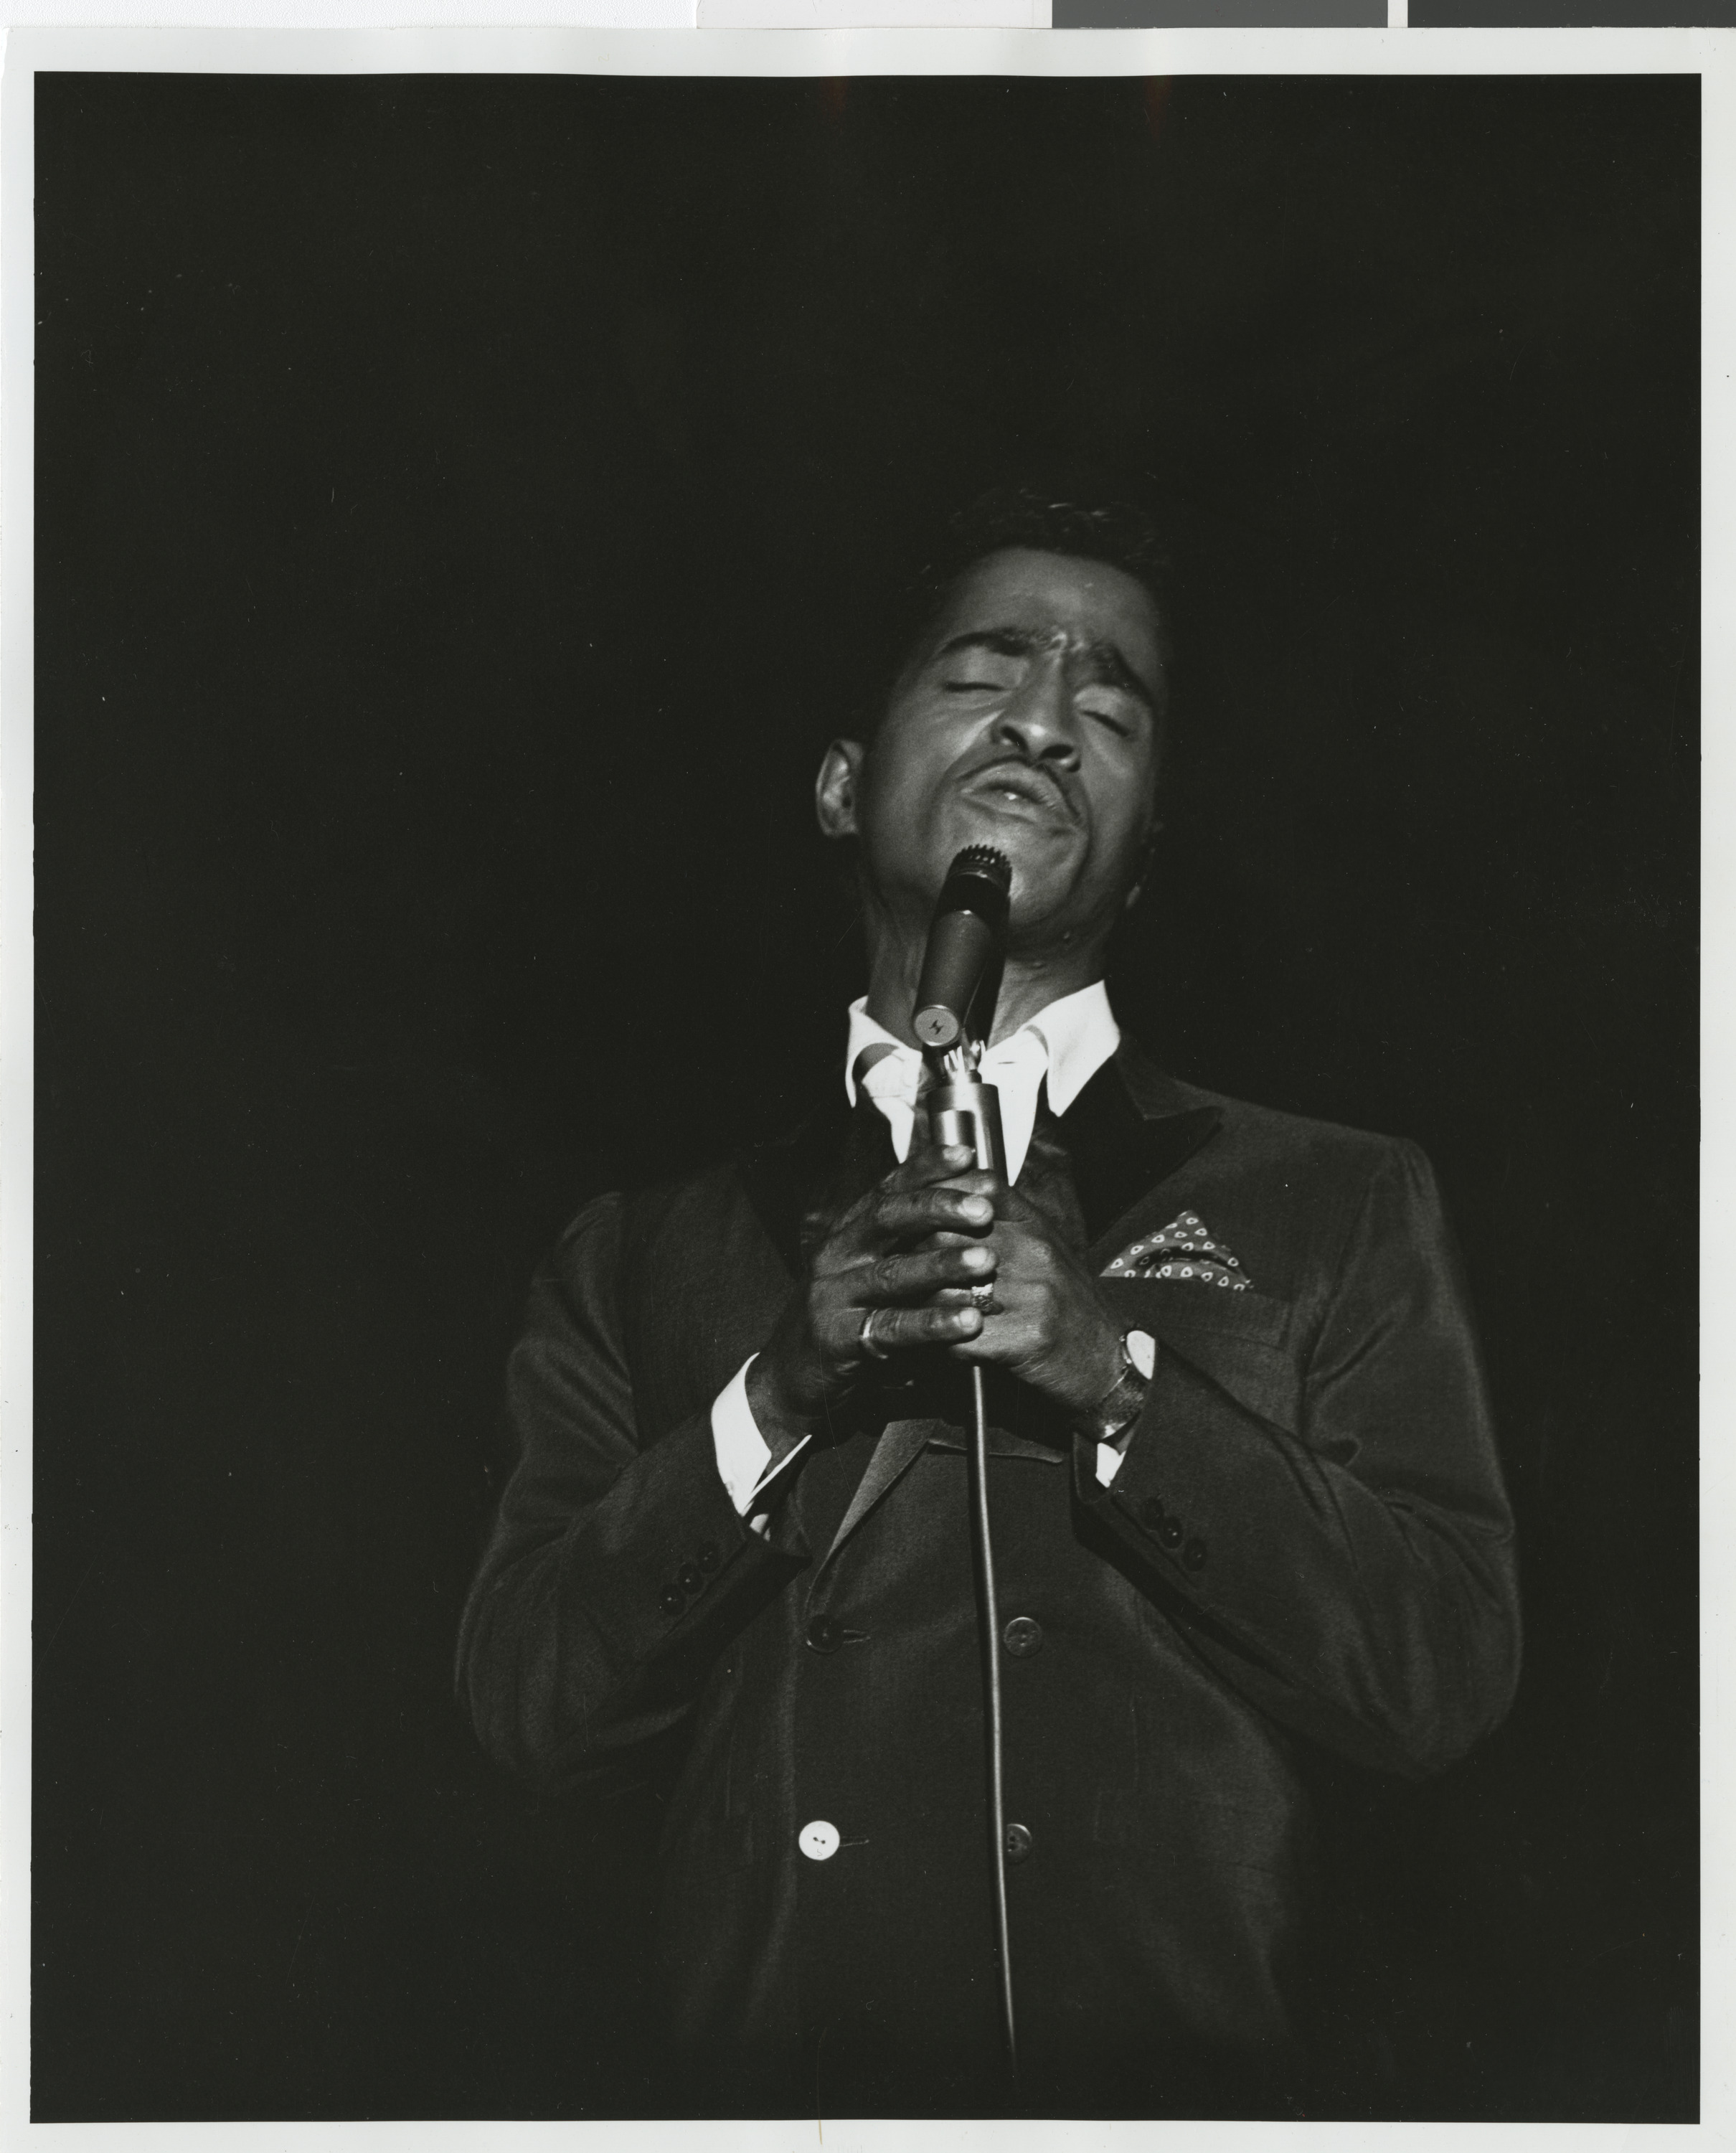 Sammy Davis, Jr. performing, Image 09